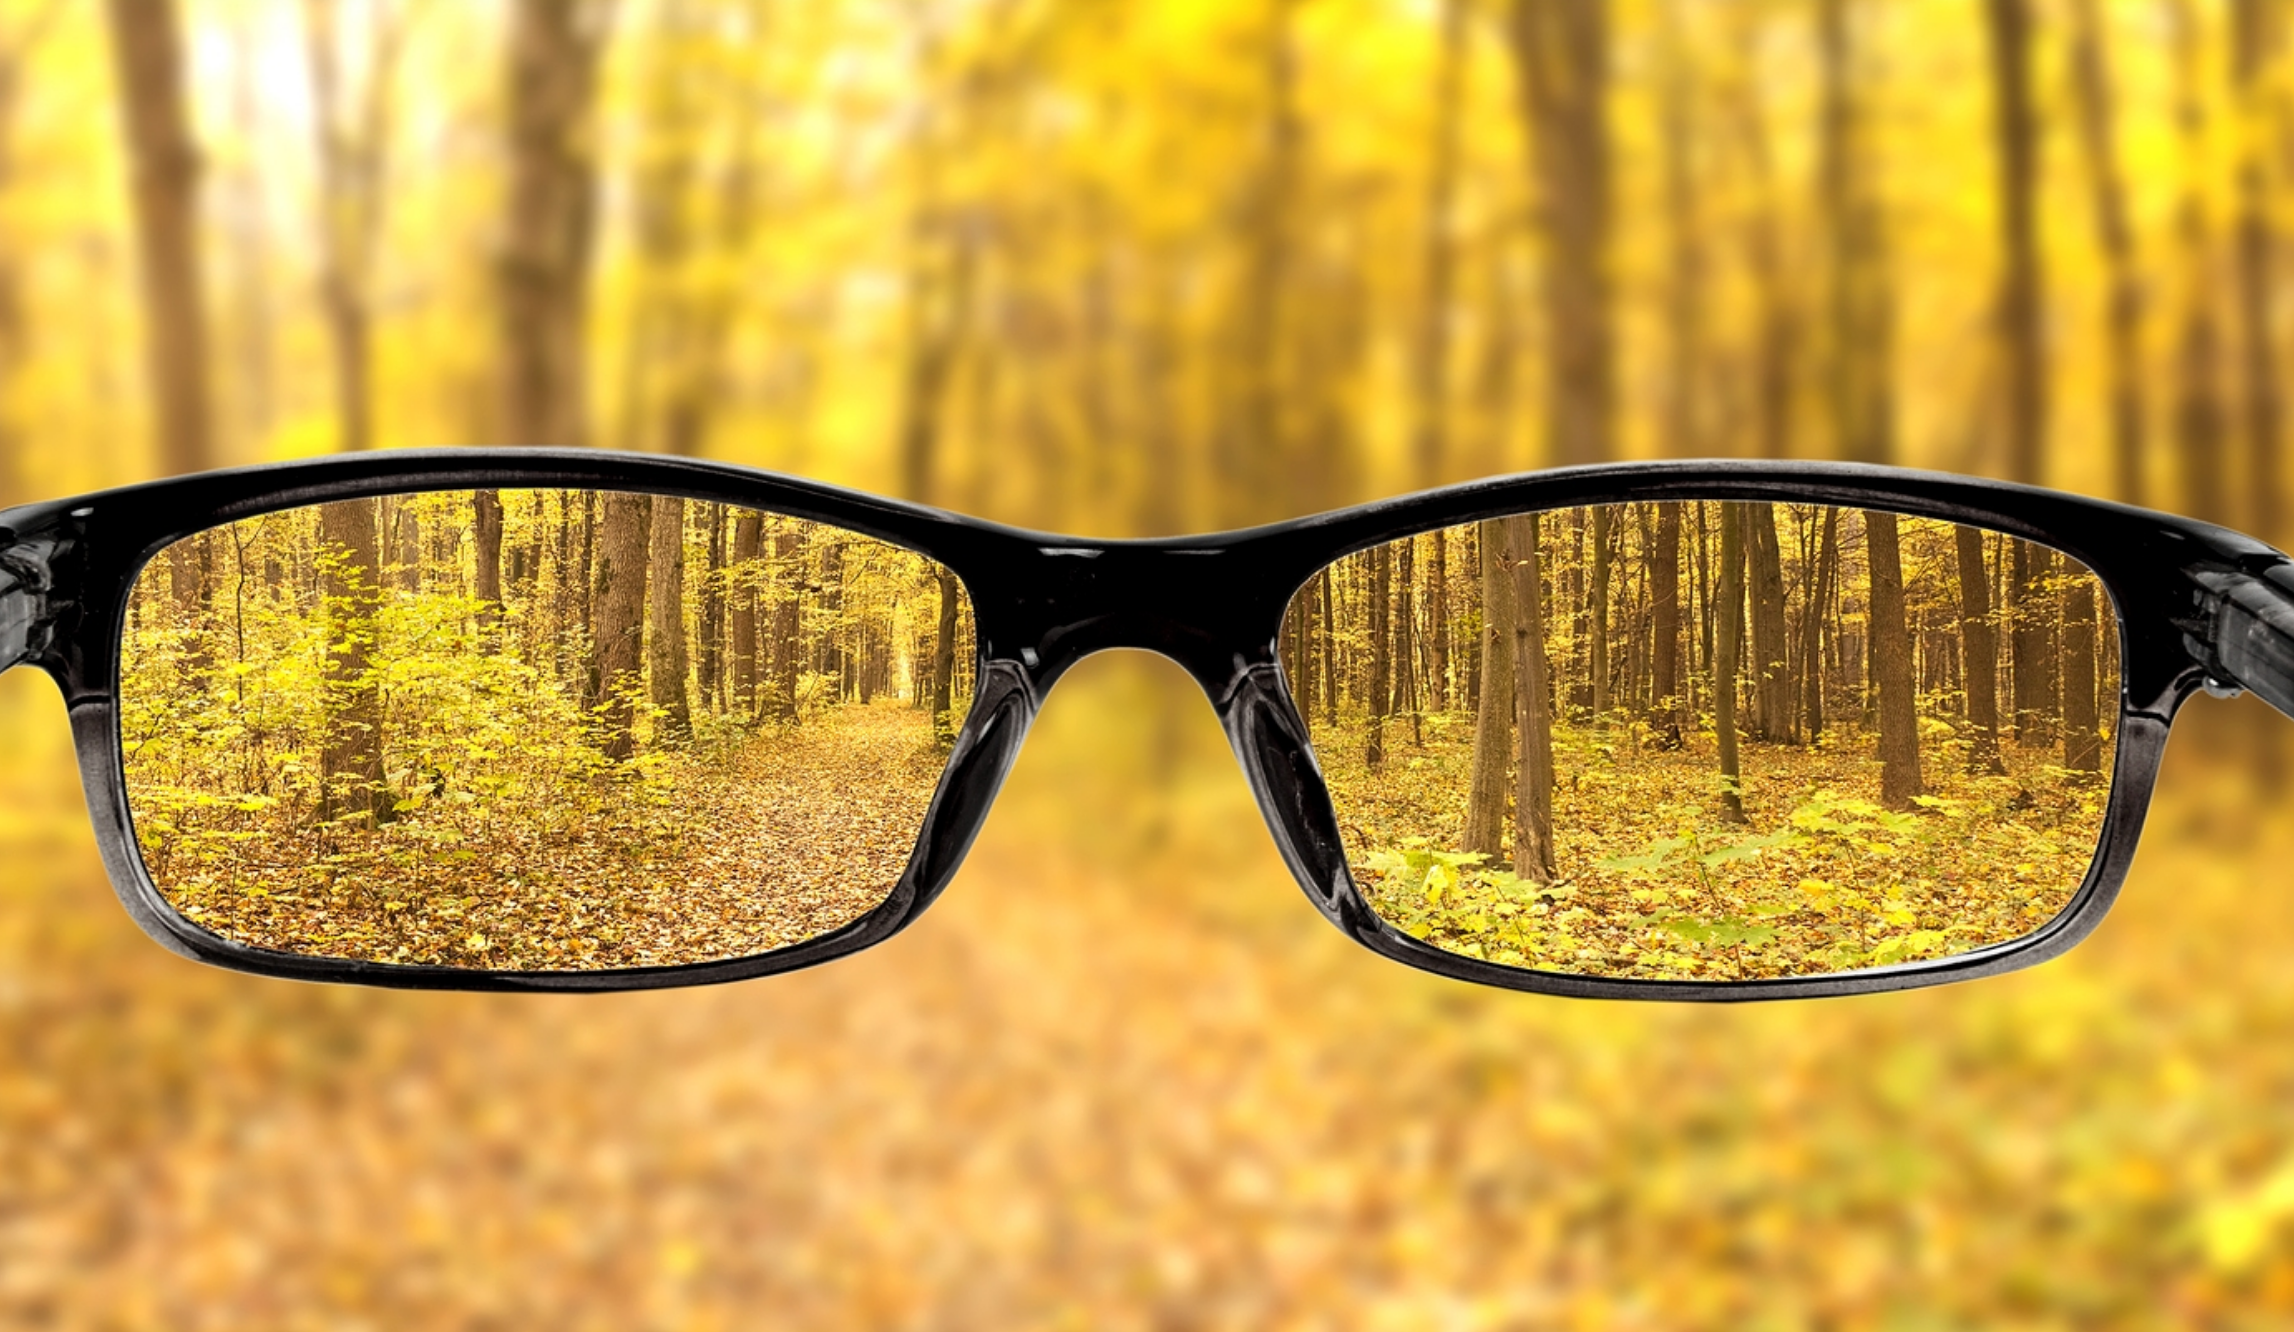 Плохо без очков. Очки на природе. Осень очки. Очки фон. Вид через очки.